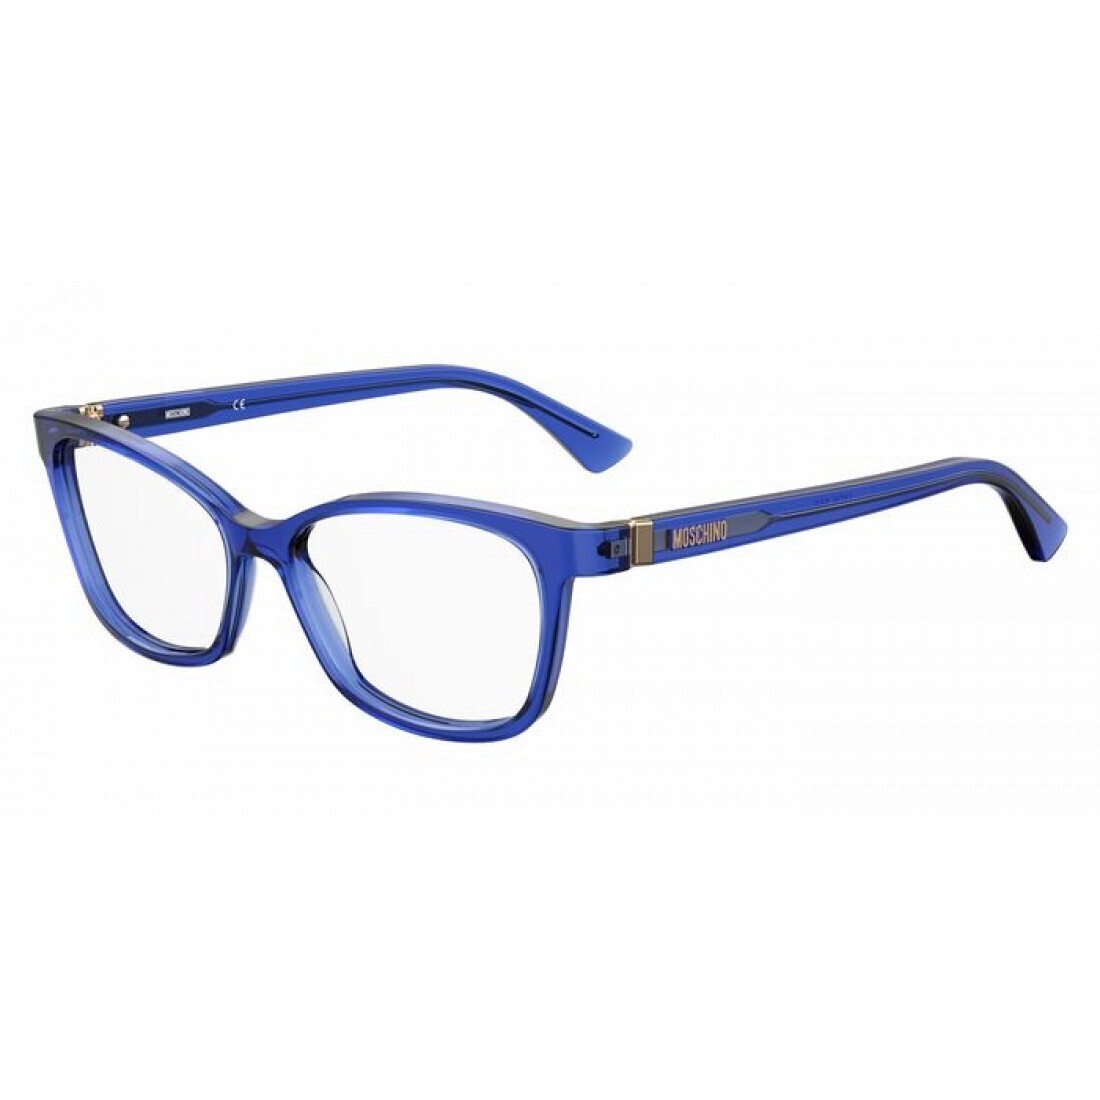 MOSCHINO 558 PJP blue occhiali